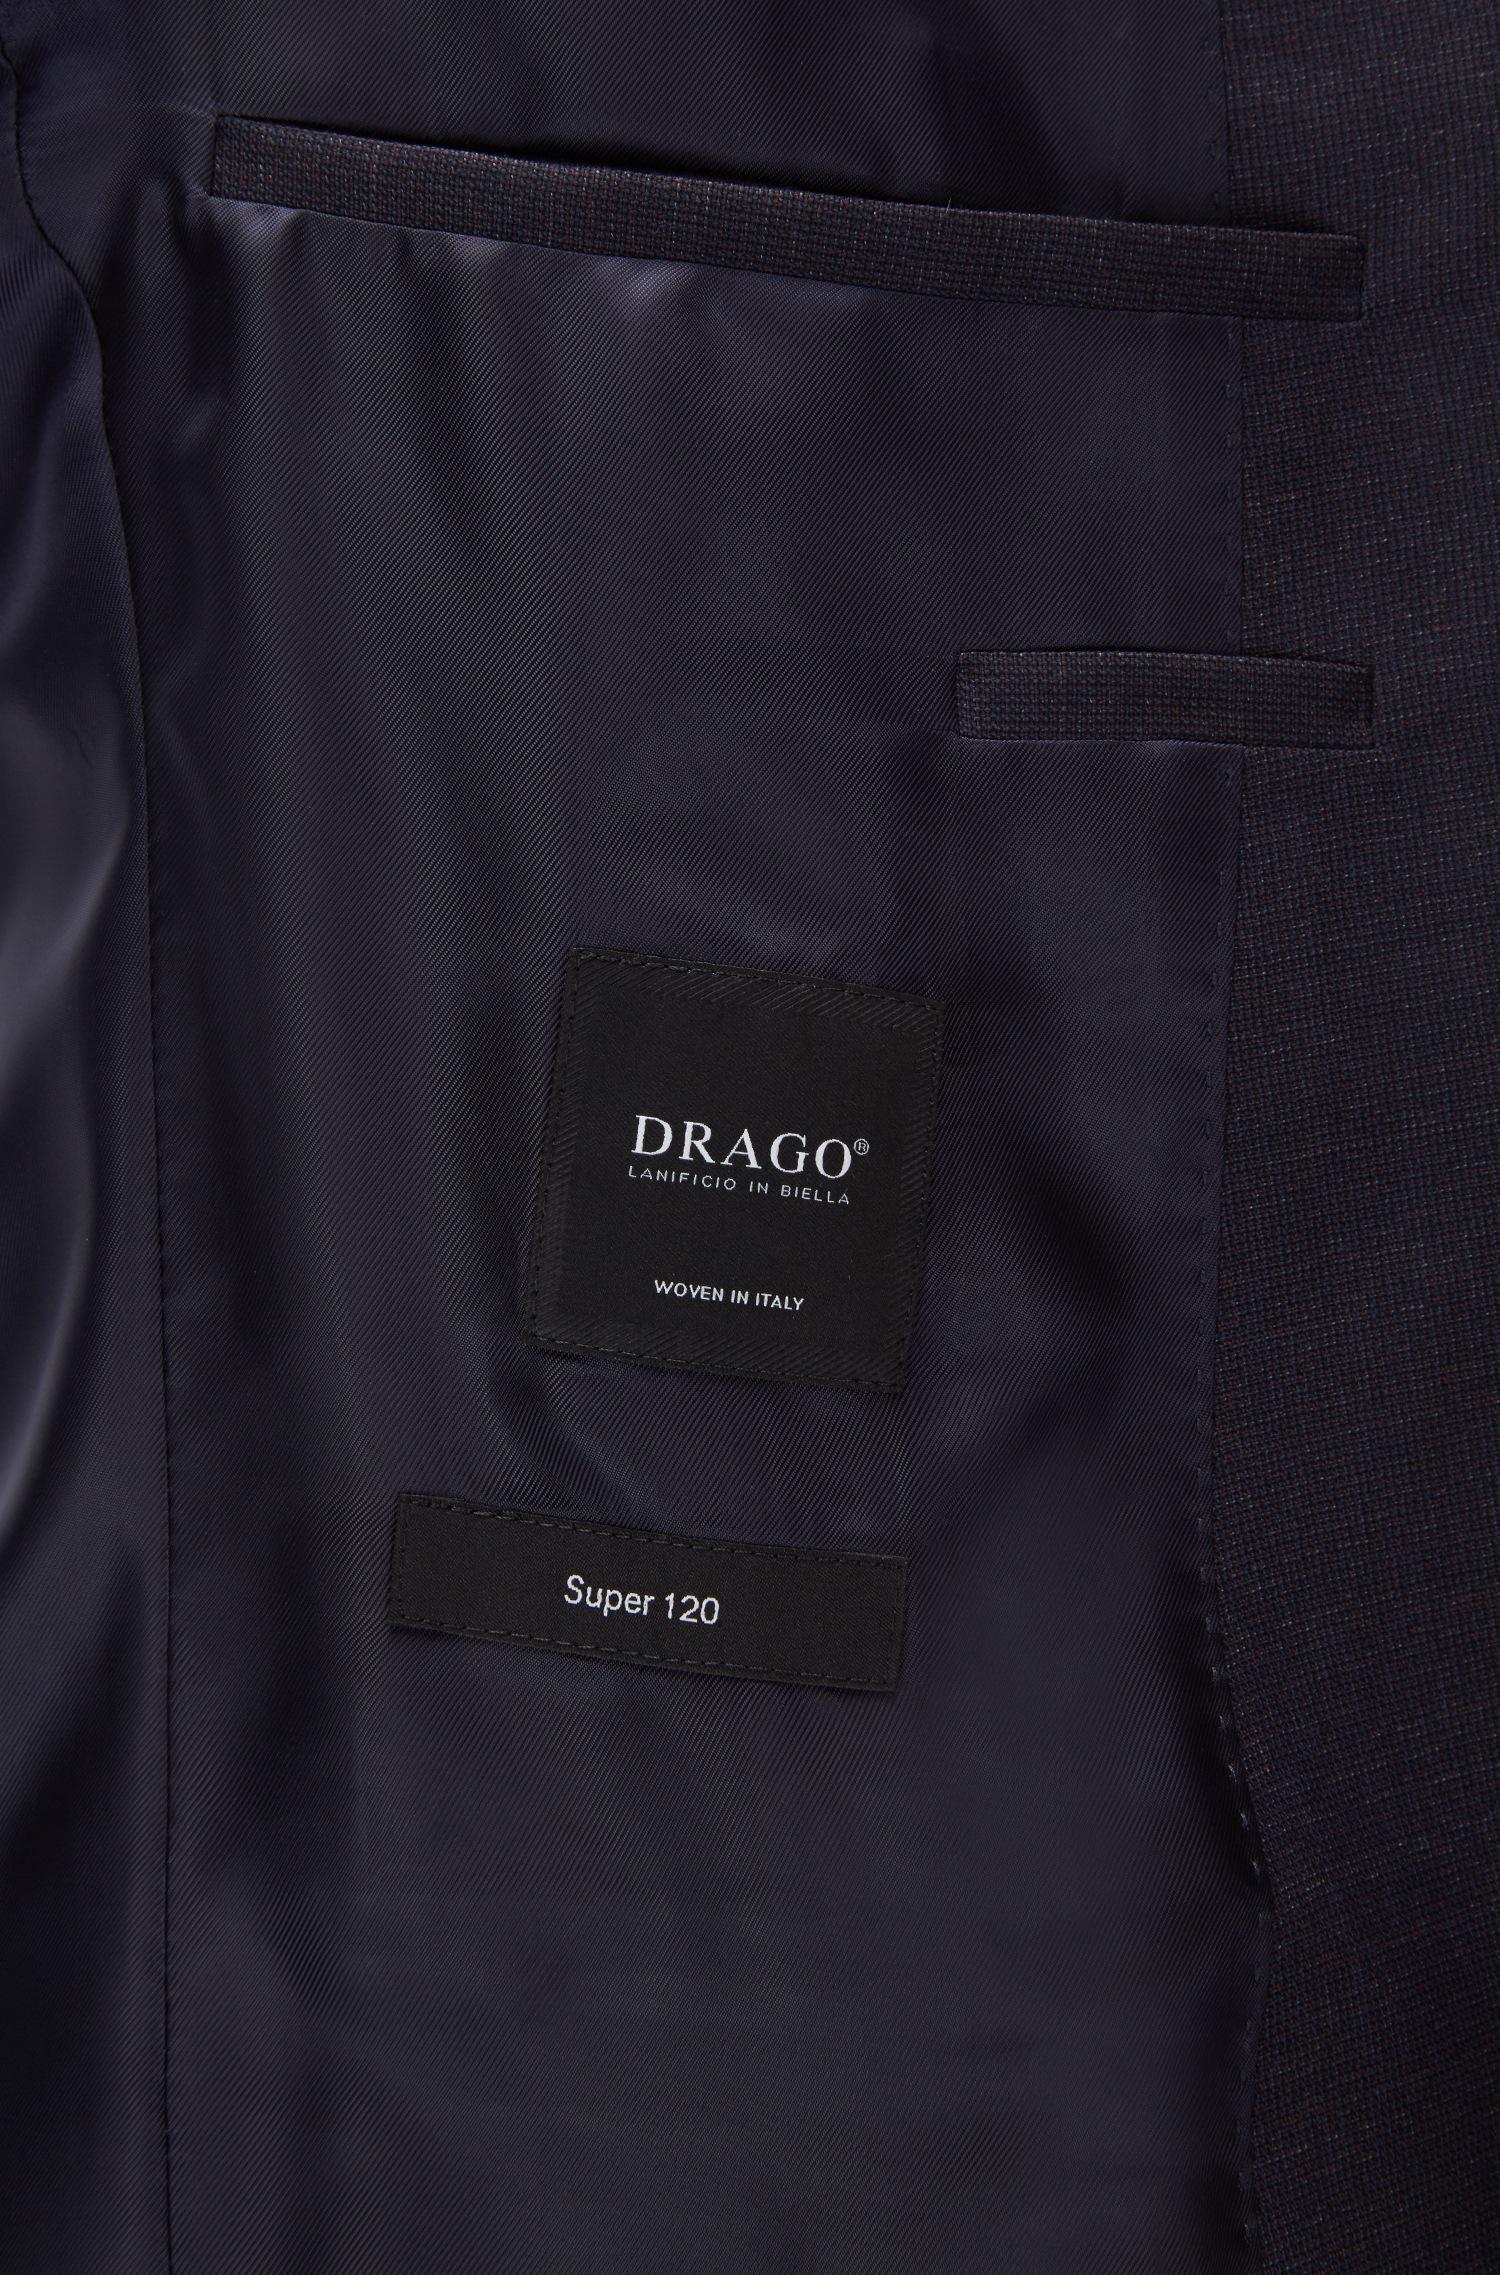 BOSS by HUGO BOSS Italian Super 130 Virgin Wool Suit, Extra Slim